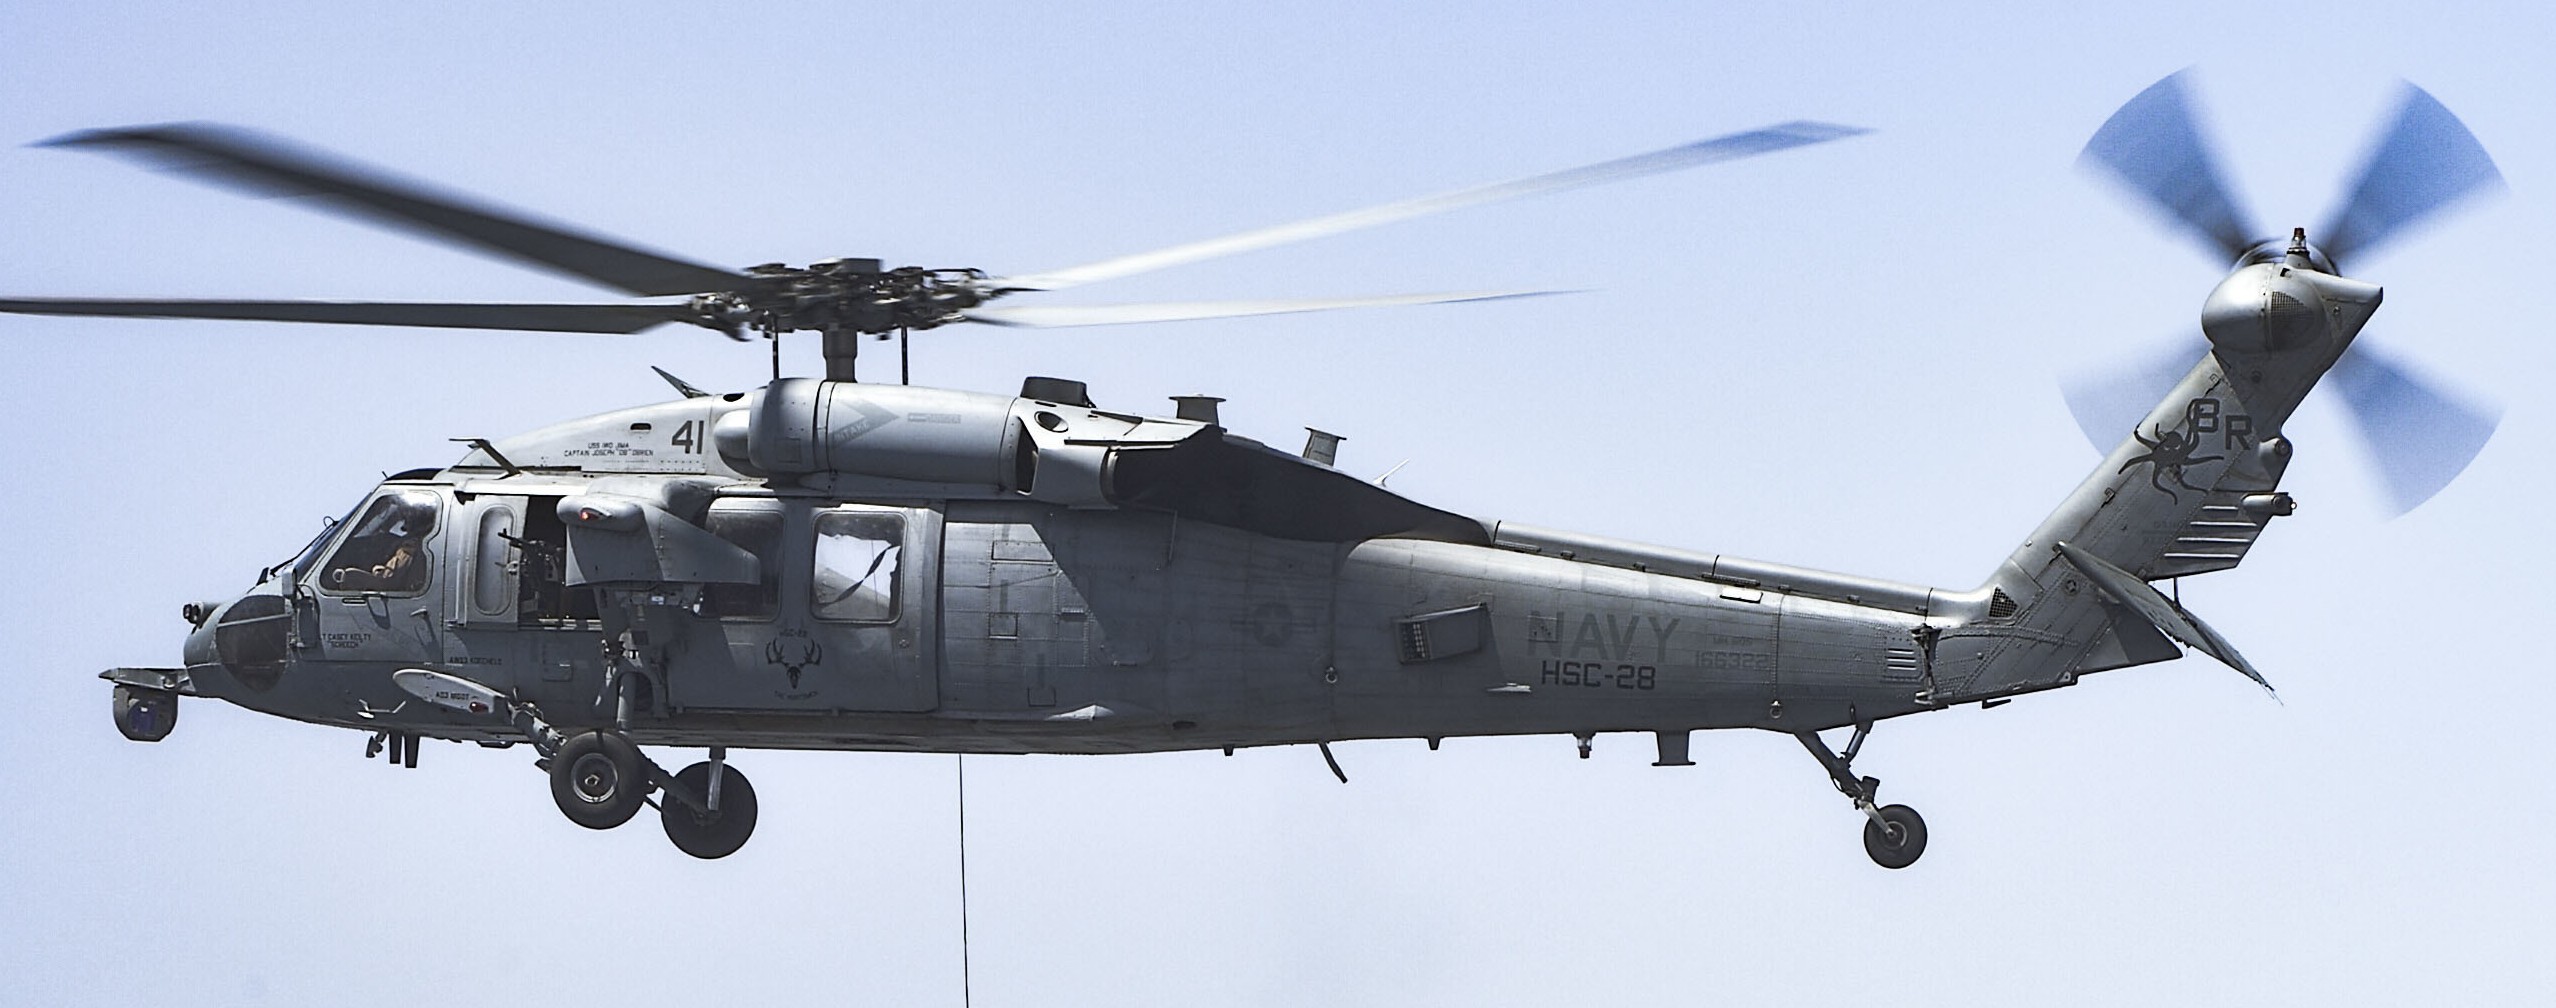 hsc-28 dragon whales helicopter sea combat squadron mh-60s seahawk us navy 208 aqaba jordan